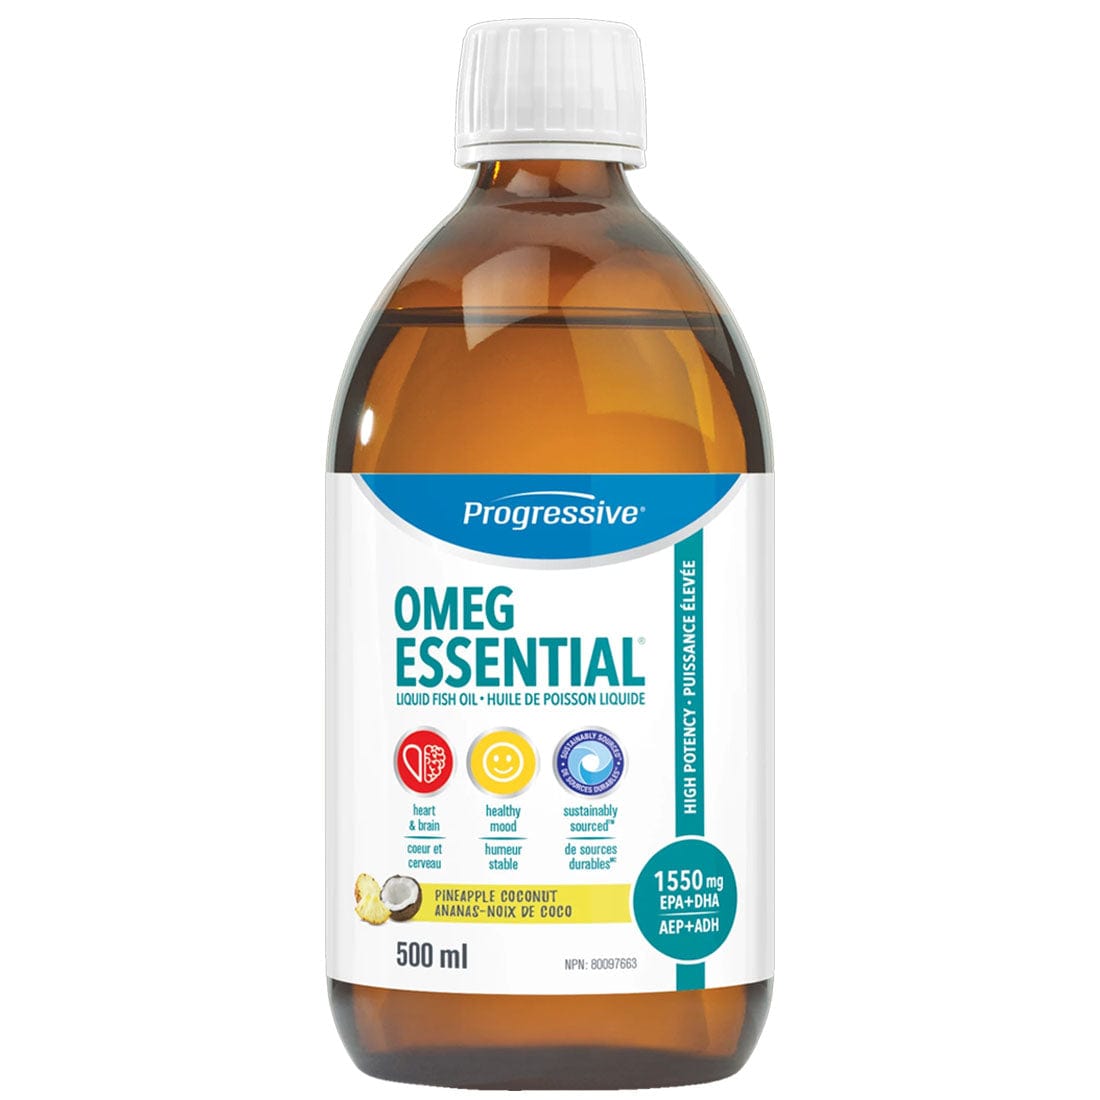 Progressive OmegEssential High Potency Fish Oil Liquid